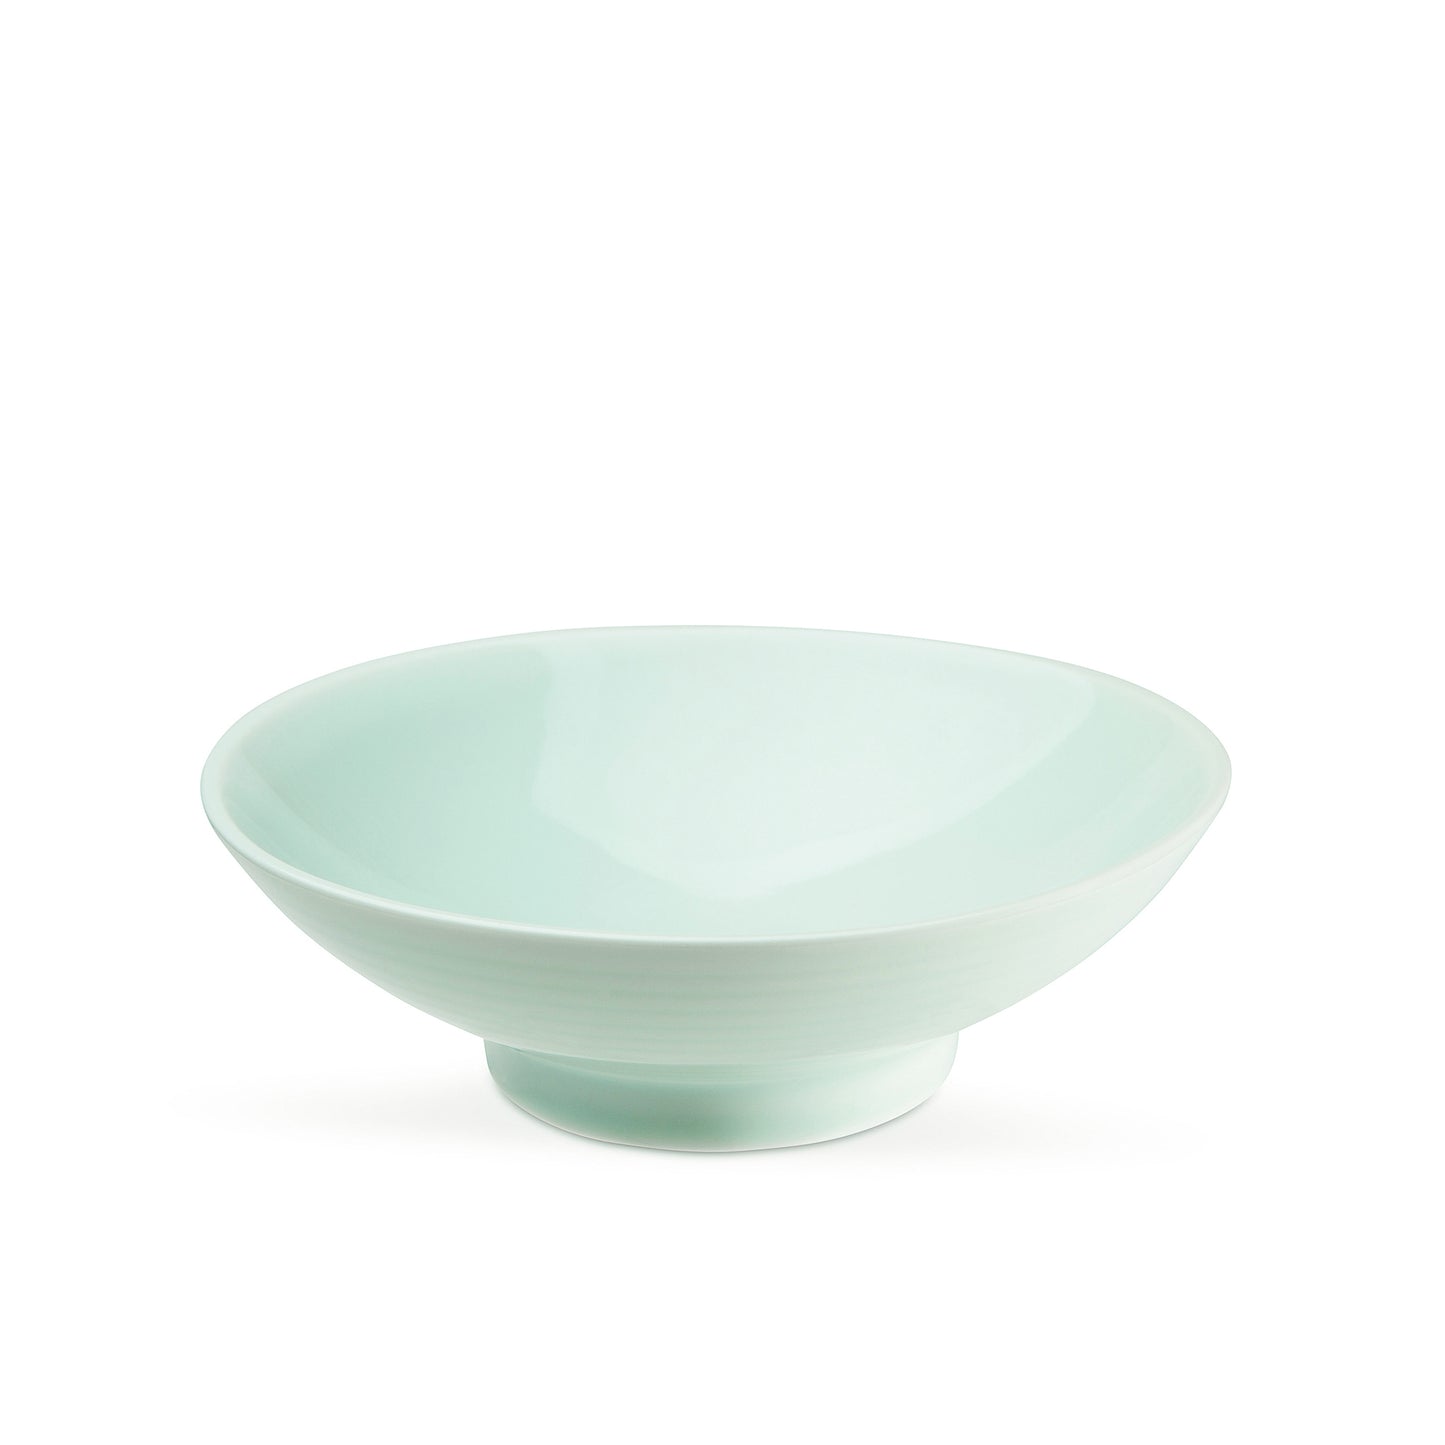 7" green celadon porcelain bowl, 30 degree angle view, media 4 of 5